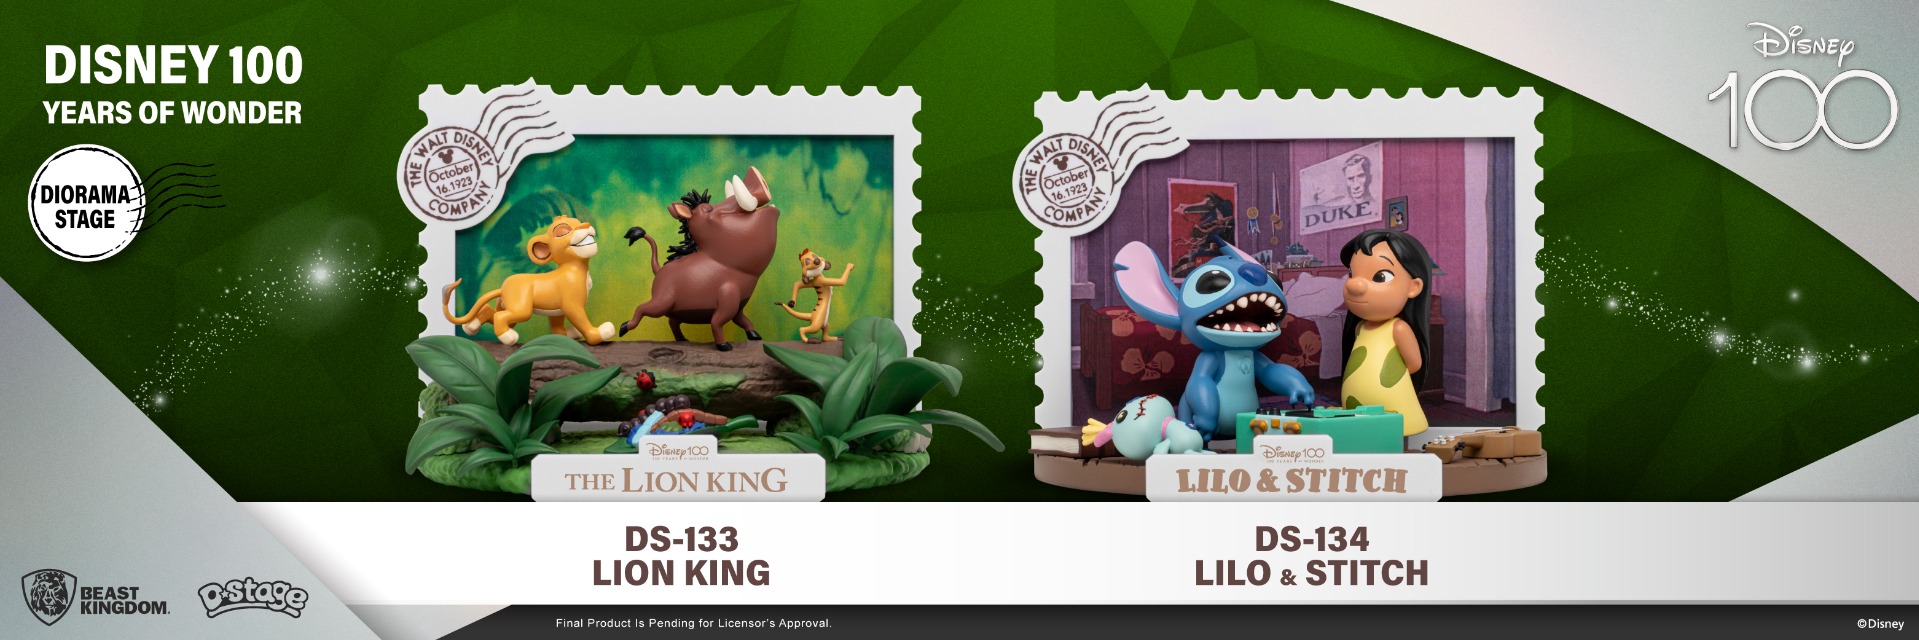 DS-133-Disney 100 Years of Wonder-Lion King, DS-134-Disney 100 Years of Wonder-Stitch & Lilo